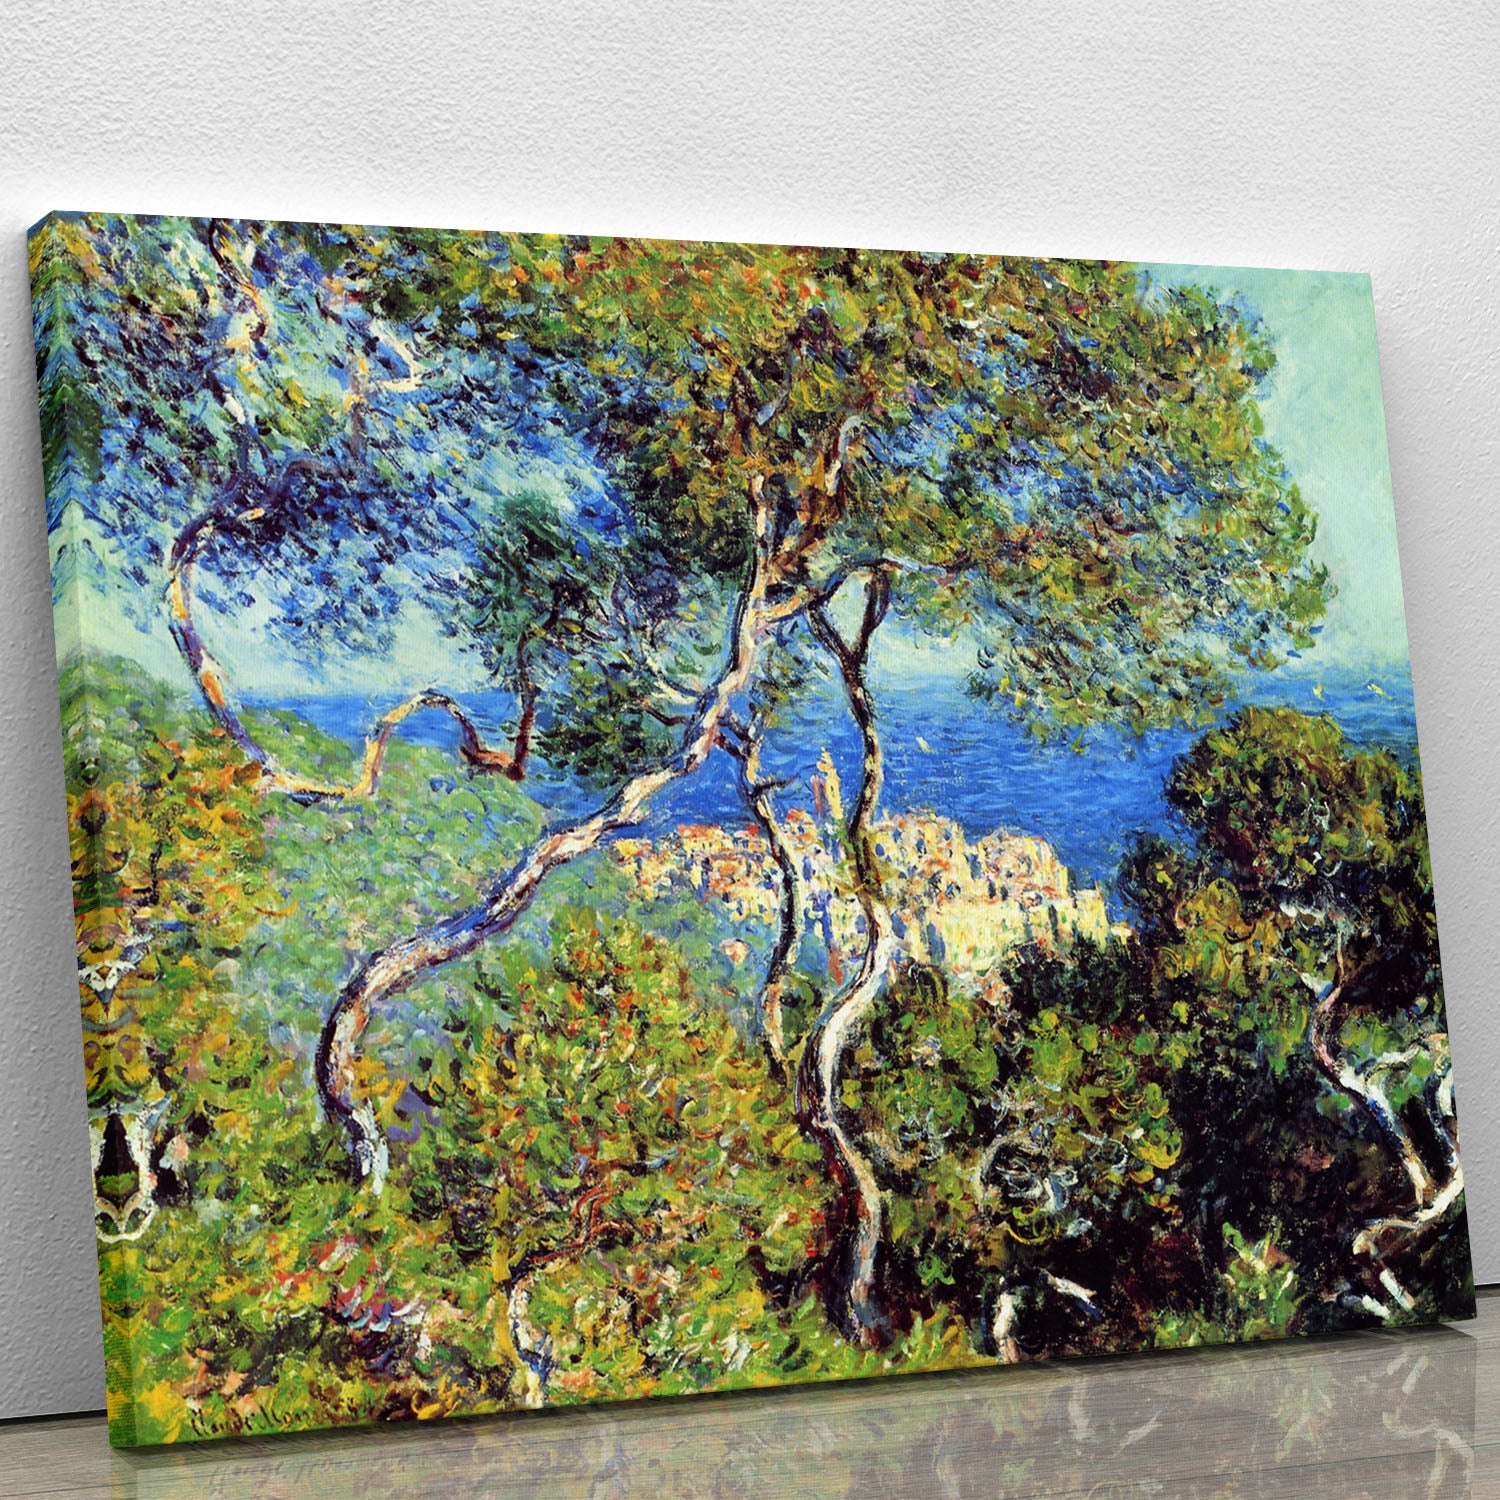 Bordighera by Monet Canvas Print or Poster - Canvas Art Rocks - 1